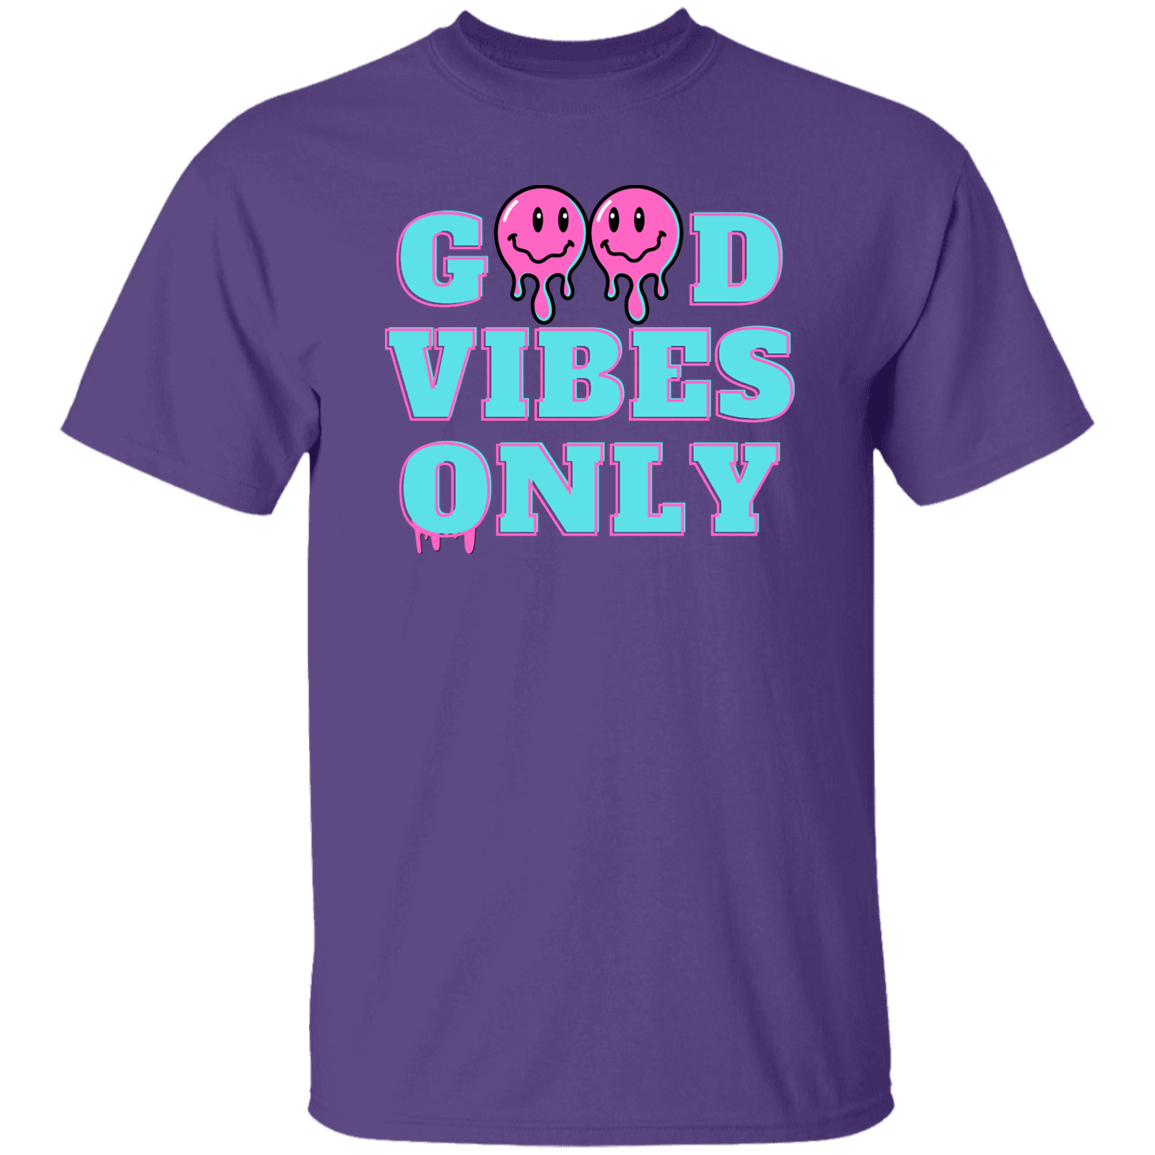 Good Vibes Only - Men's T-Shirt